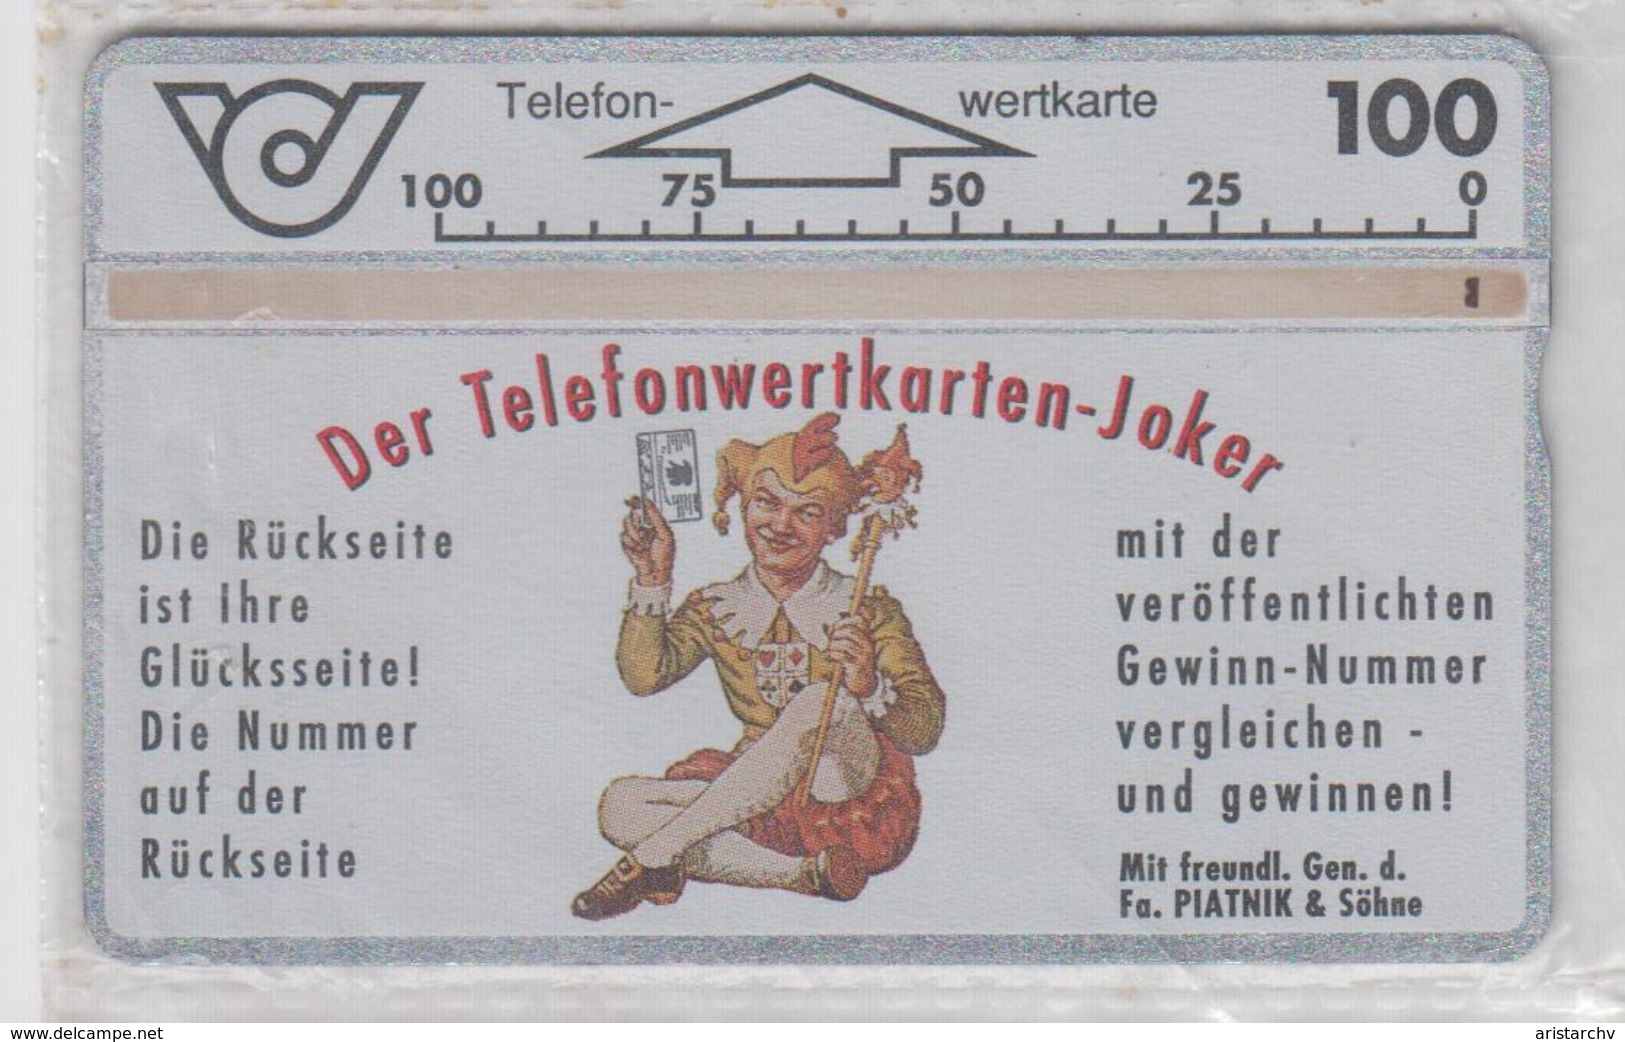 AUSTRIA 1991 DER TELEFONWERTKARTEN JOKER USED - Austria